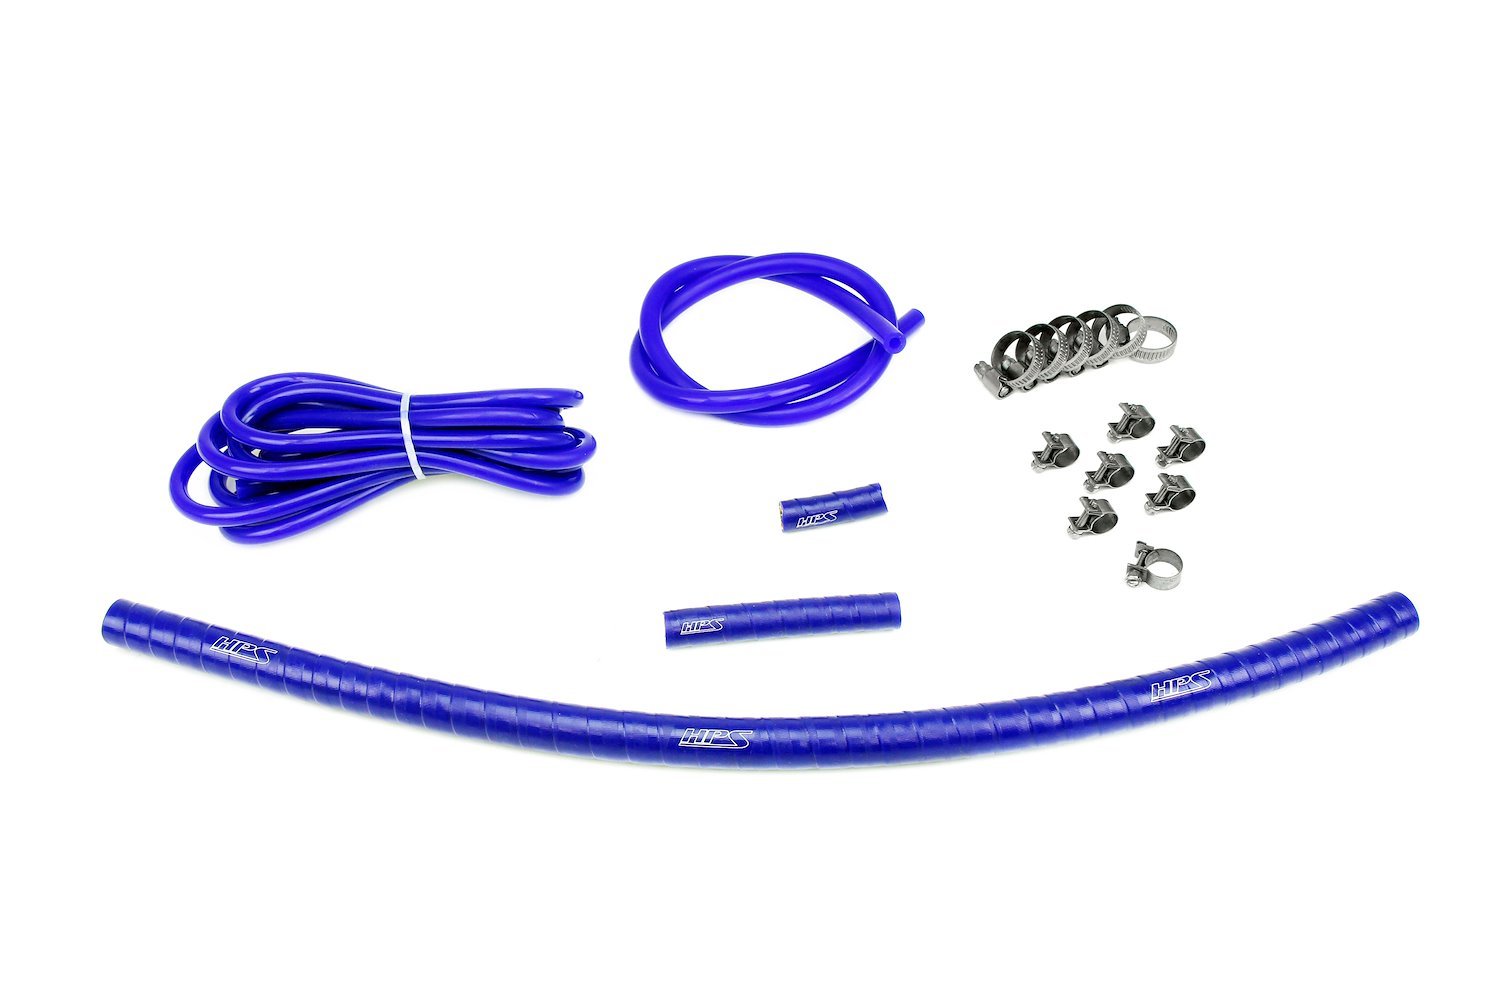 57-2013-BLUE Vacuum Hose Kit, High-Temp. & Oil Resistant Silicone, Replaces Rubber Vacuum & Breather Hose